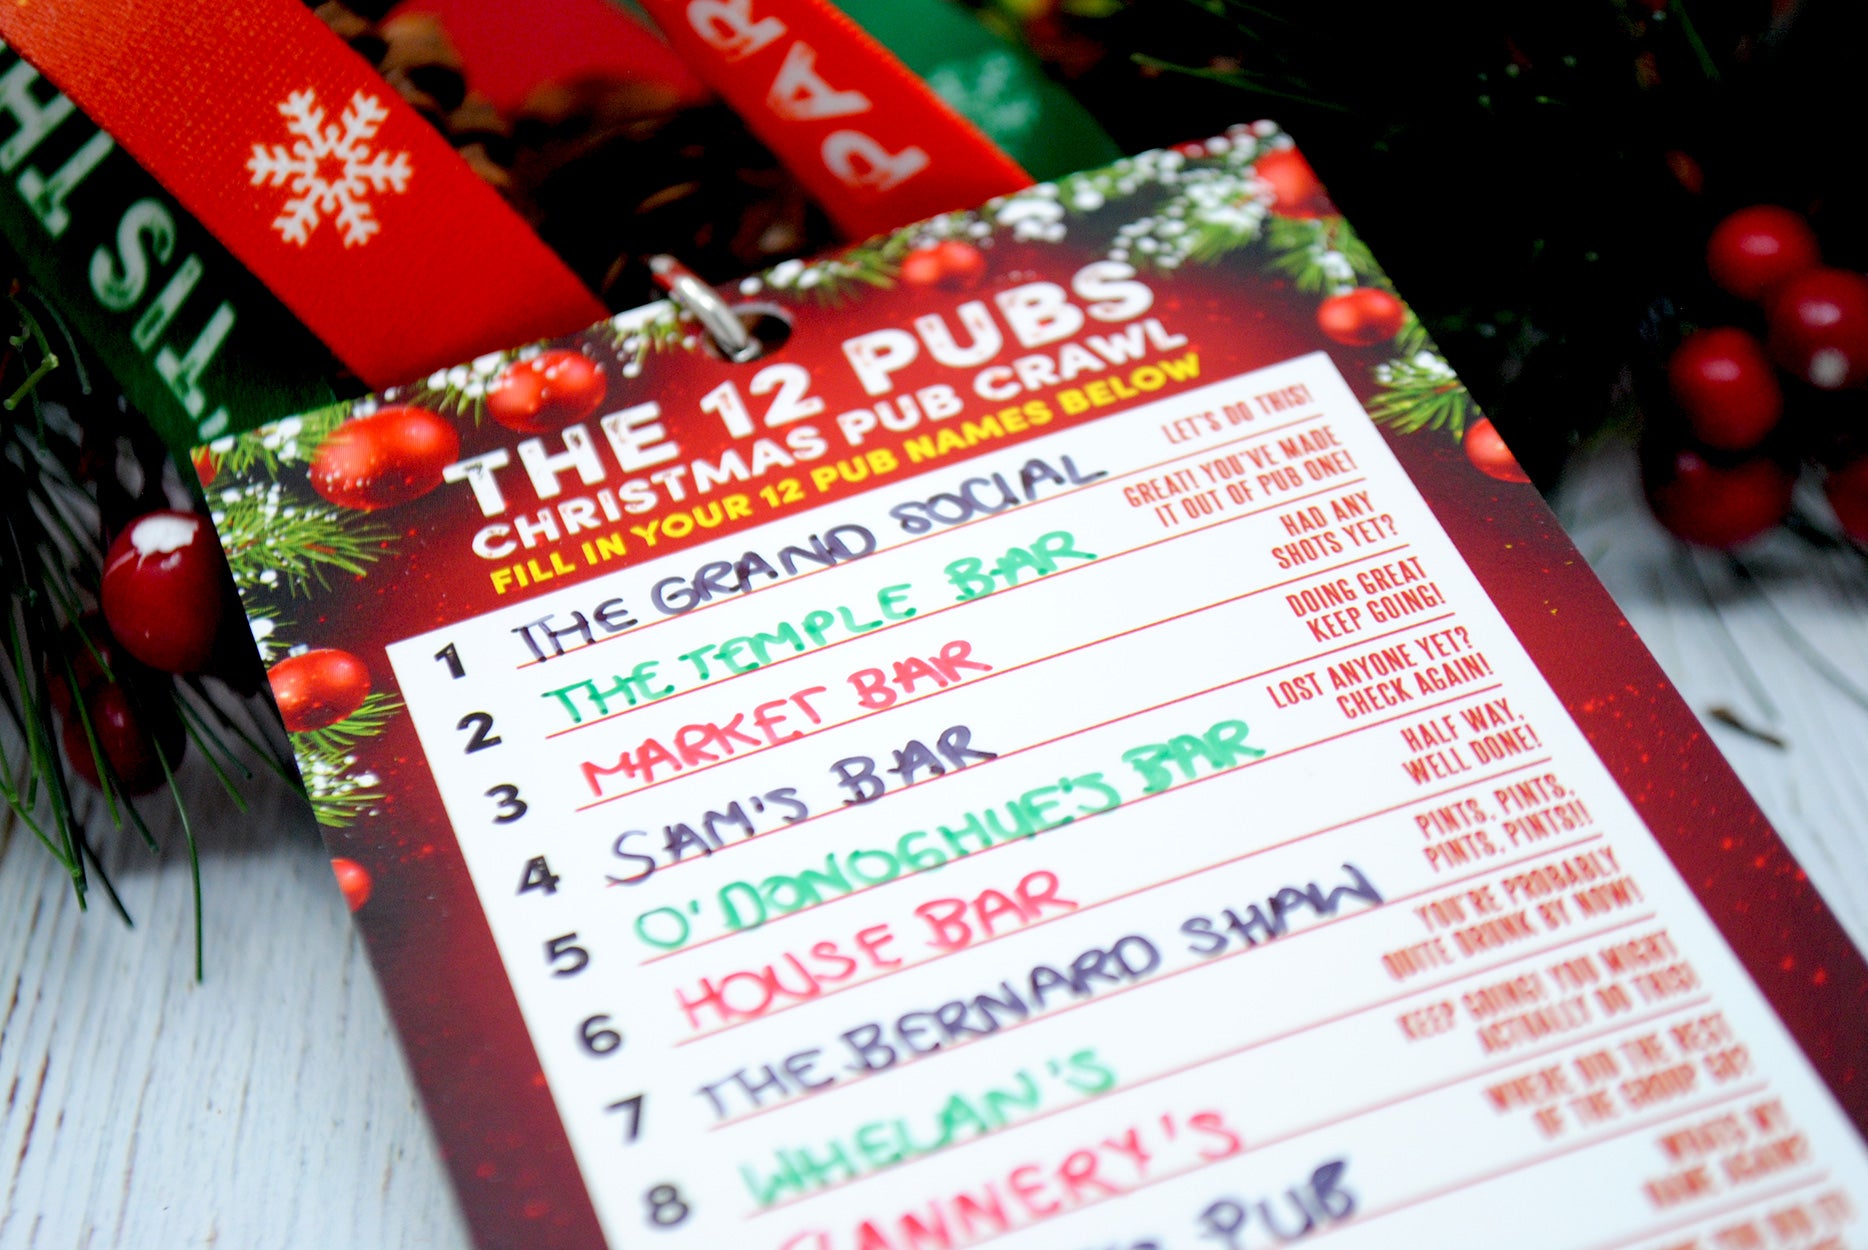 the 12 pubs of christmas dublin pub crawl route